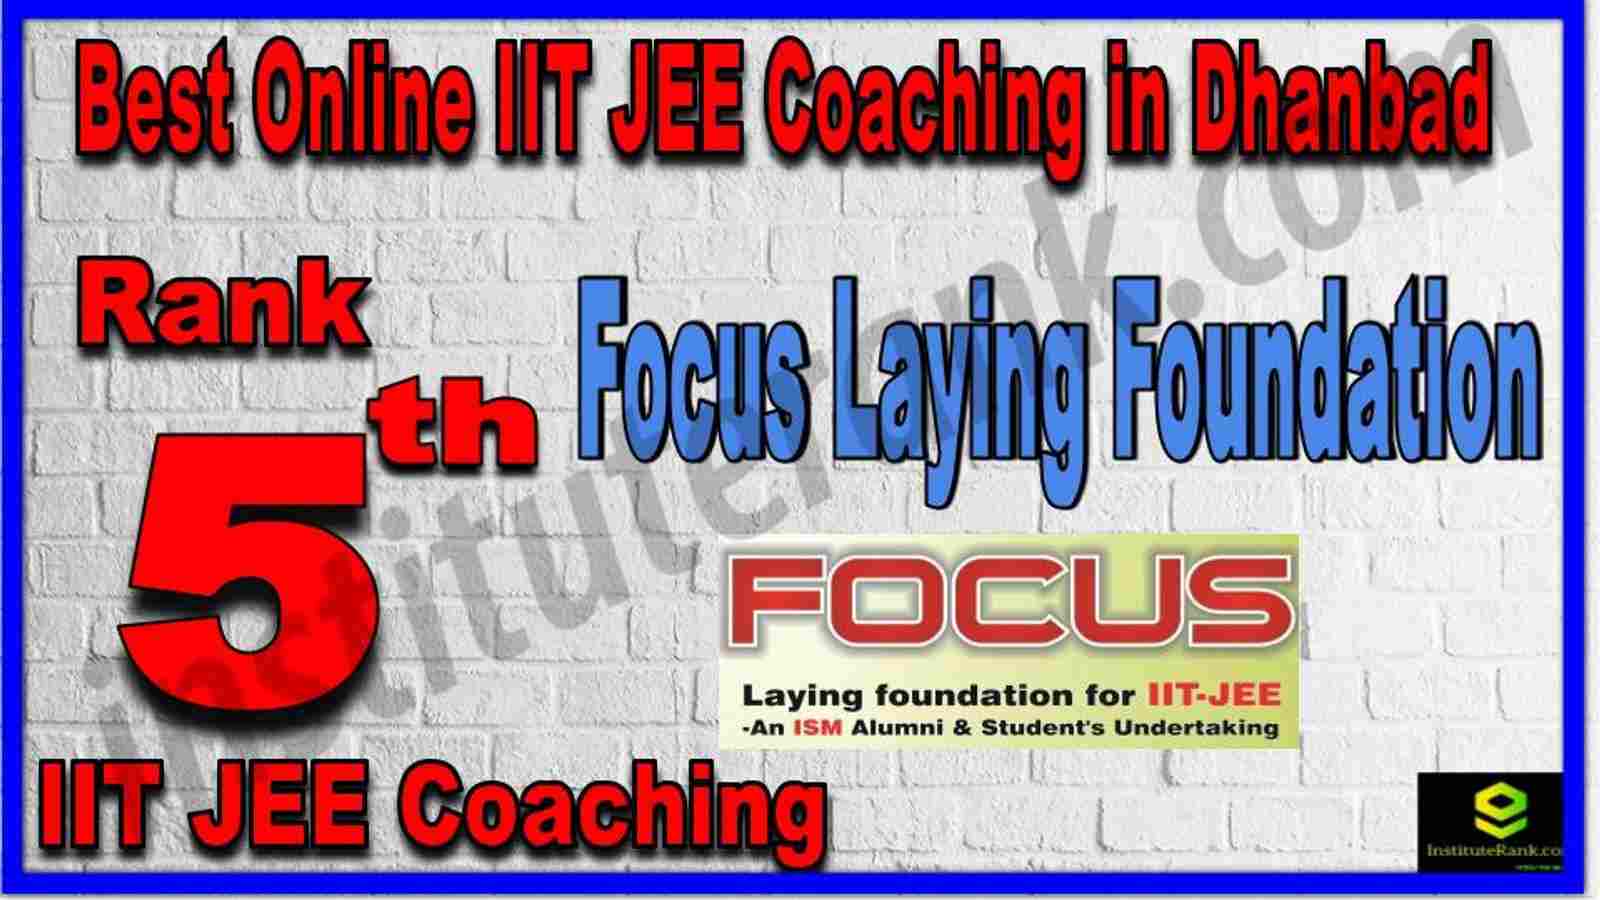 Rank 5th Best Online IIT JEE Coaching in Dhanbad